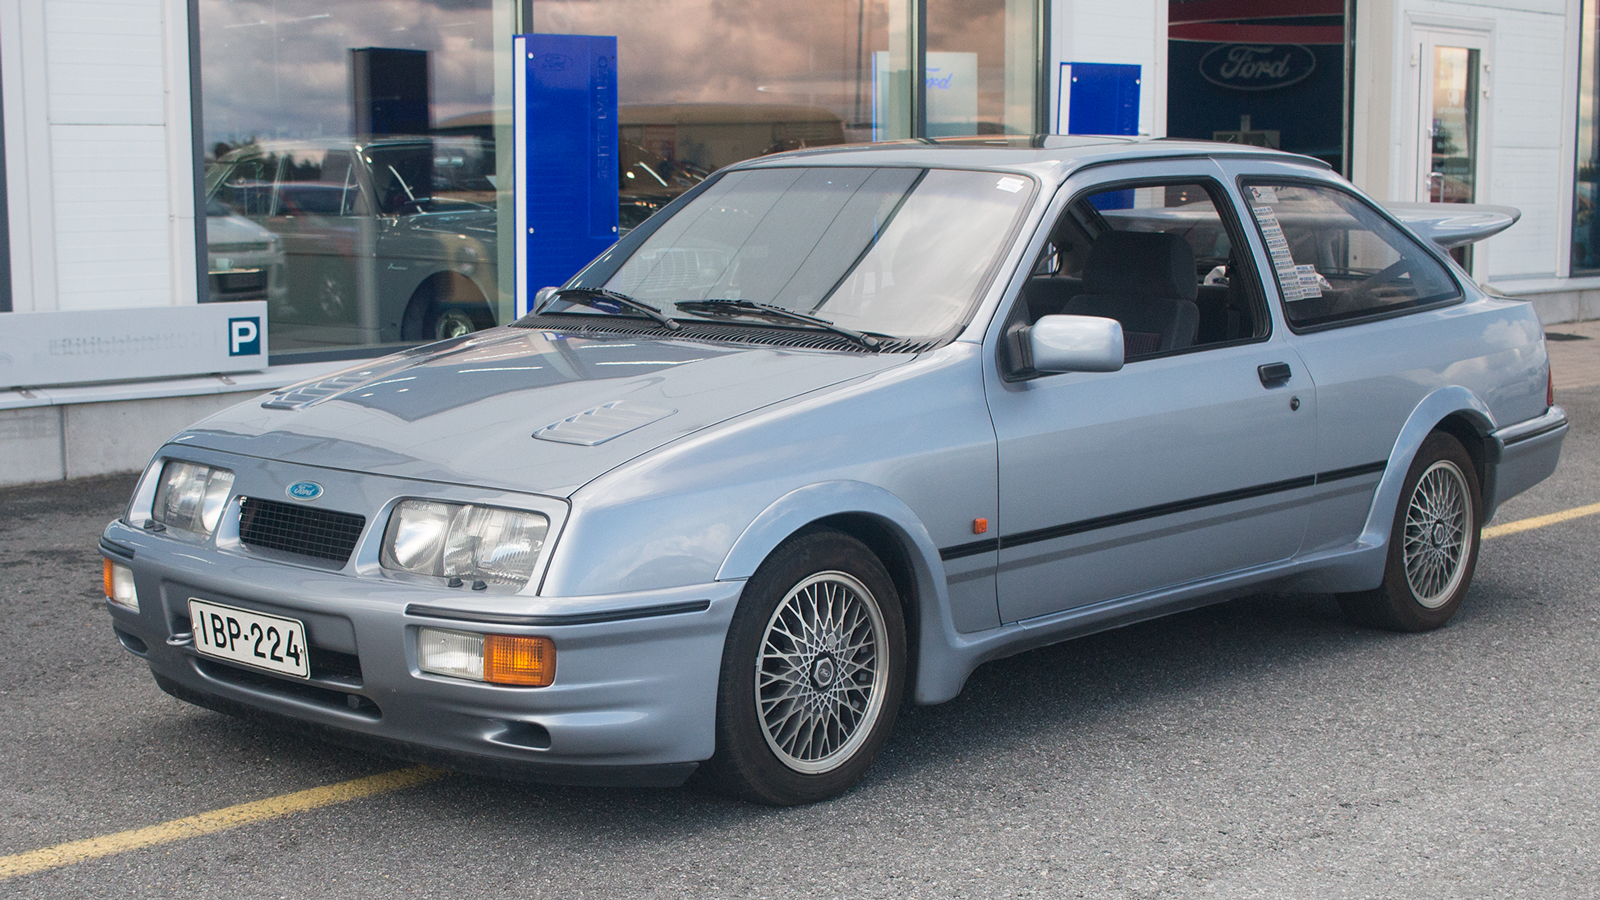 Levoranta Sierra RS Cosworth 2.0 etu